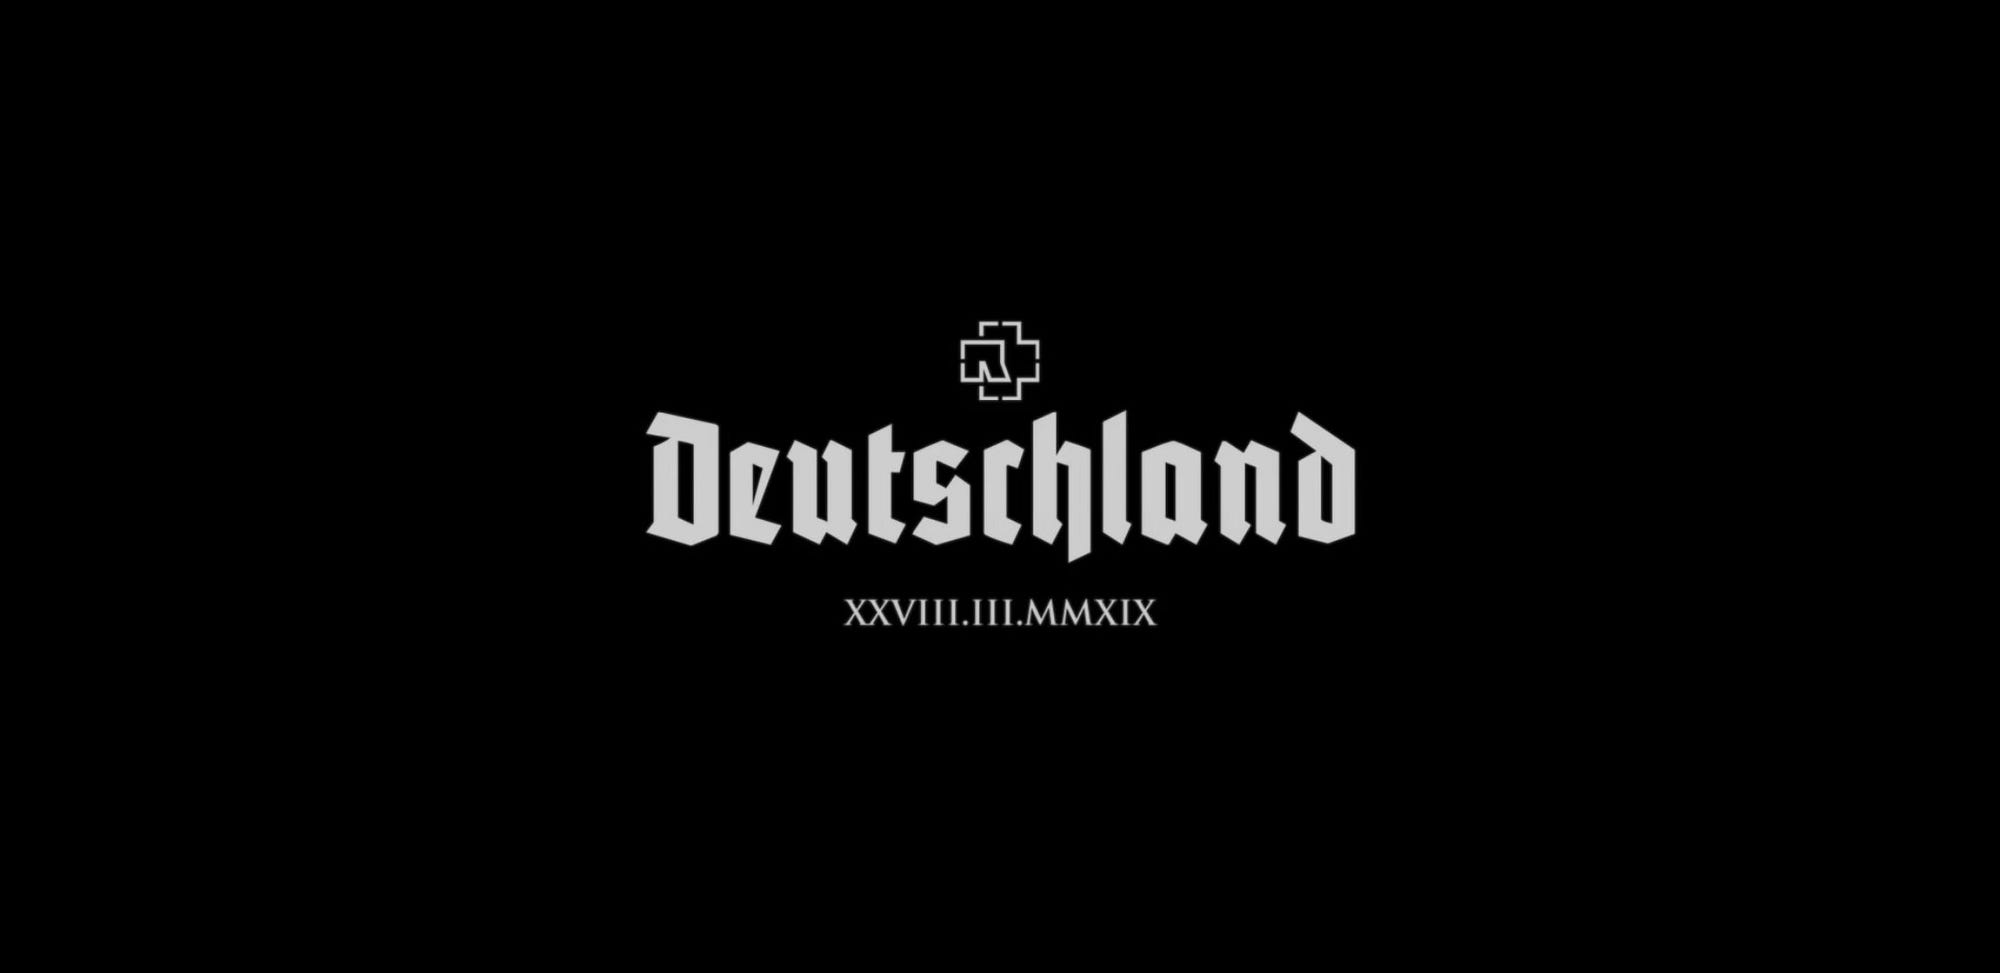 On “Germania”, Heimat, and Belonging in the German Left